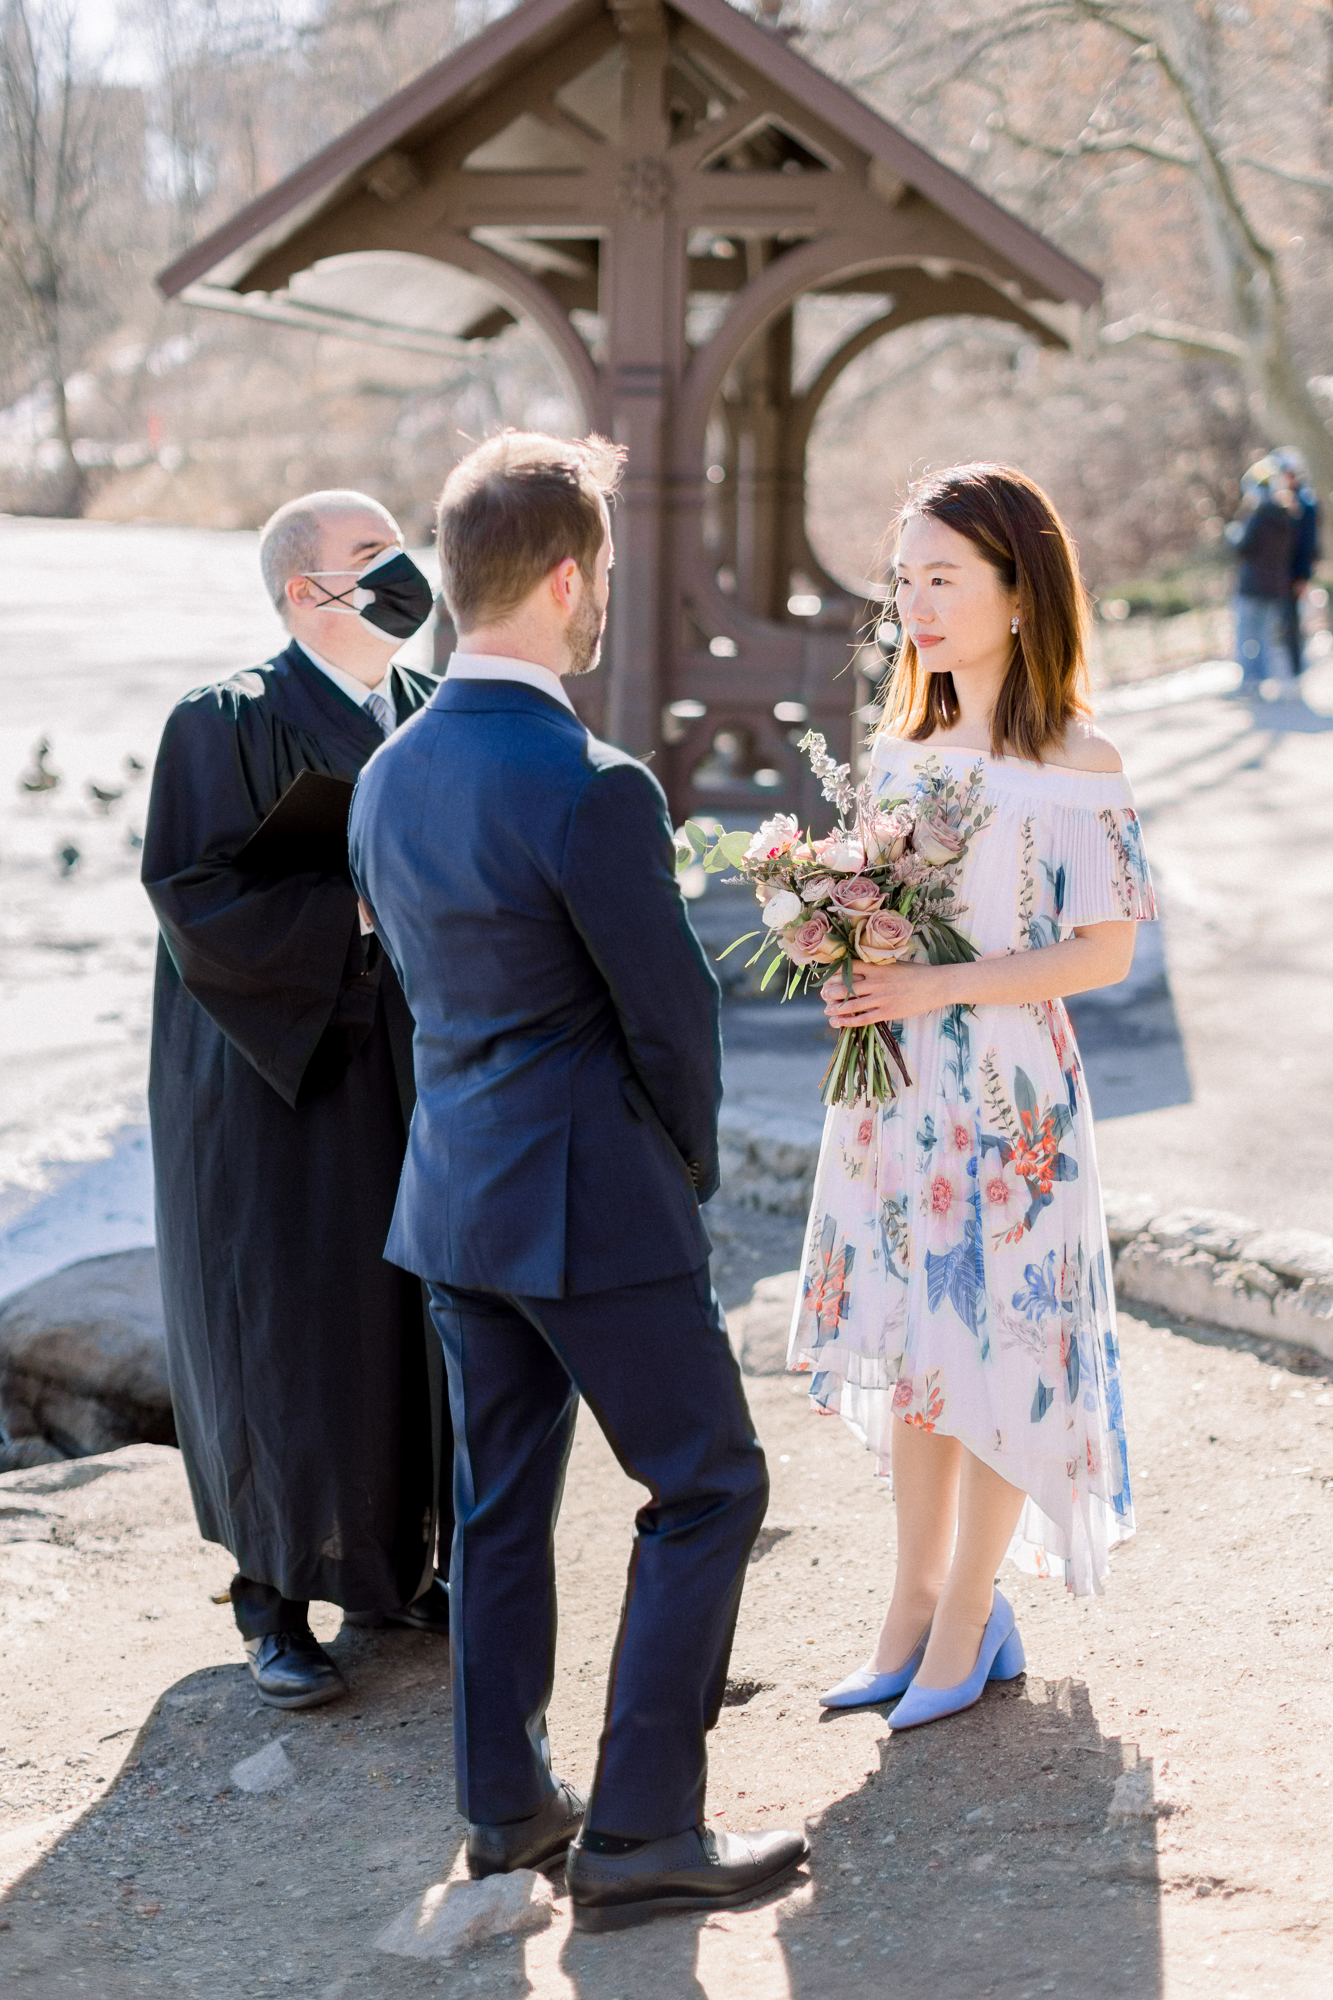 Aesthetic Central Park Wedding Photos in Wintery New York